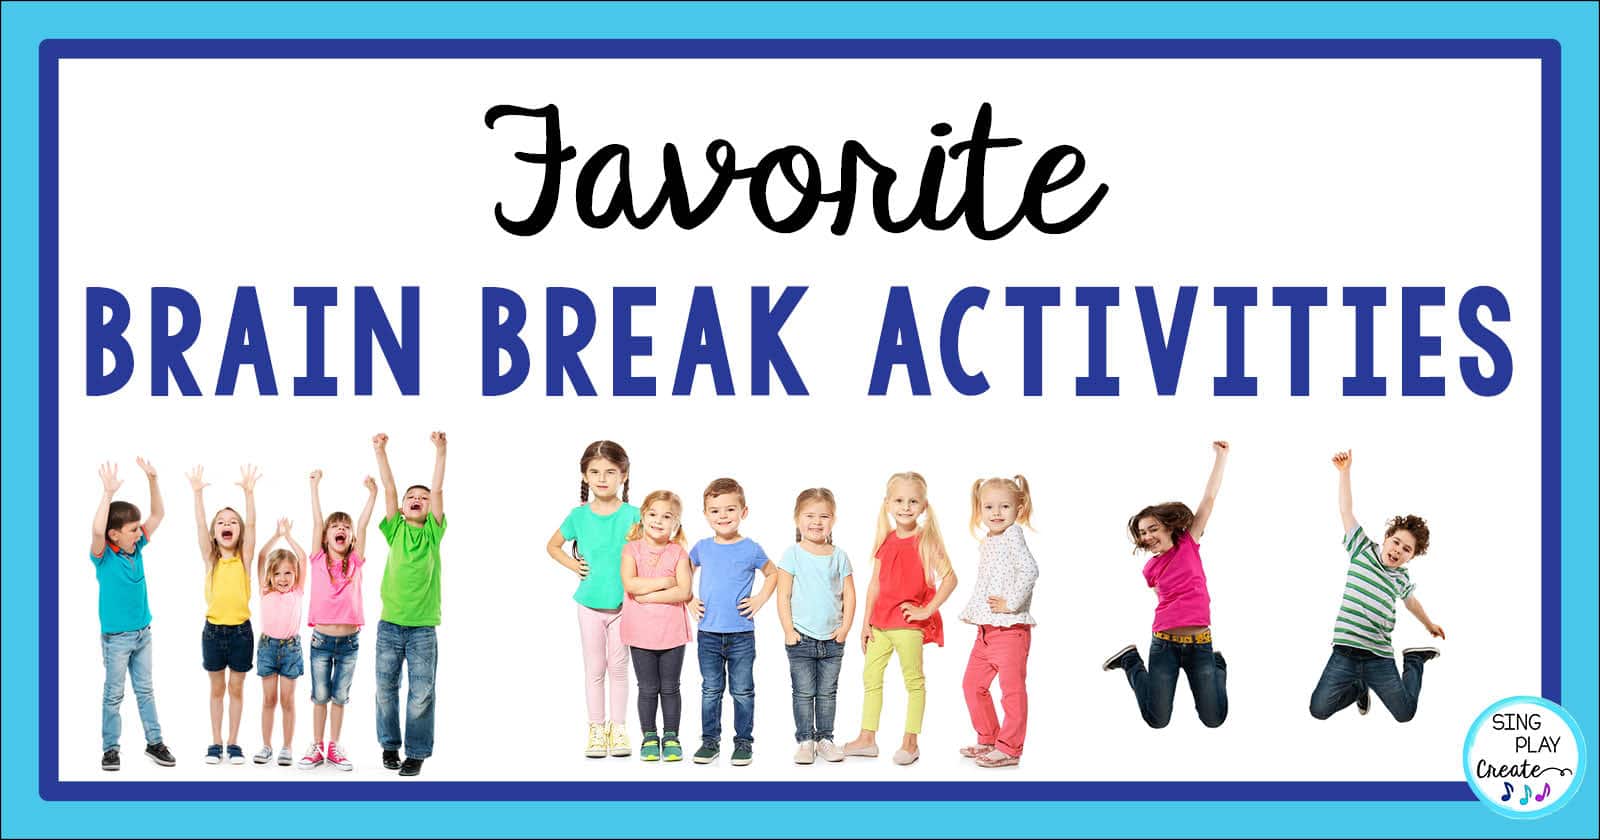 Dinosaur Freeze Dance, Brain Break, Exercise, Movement Activity